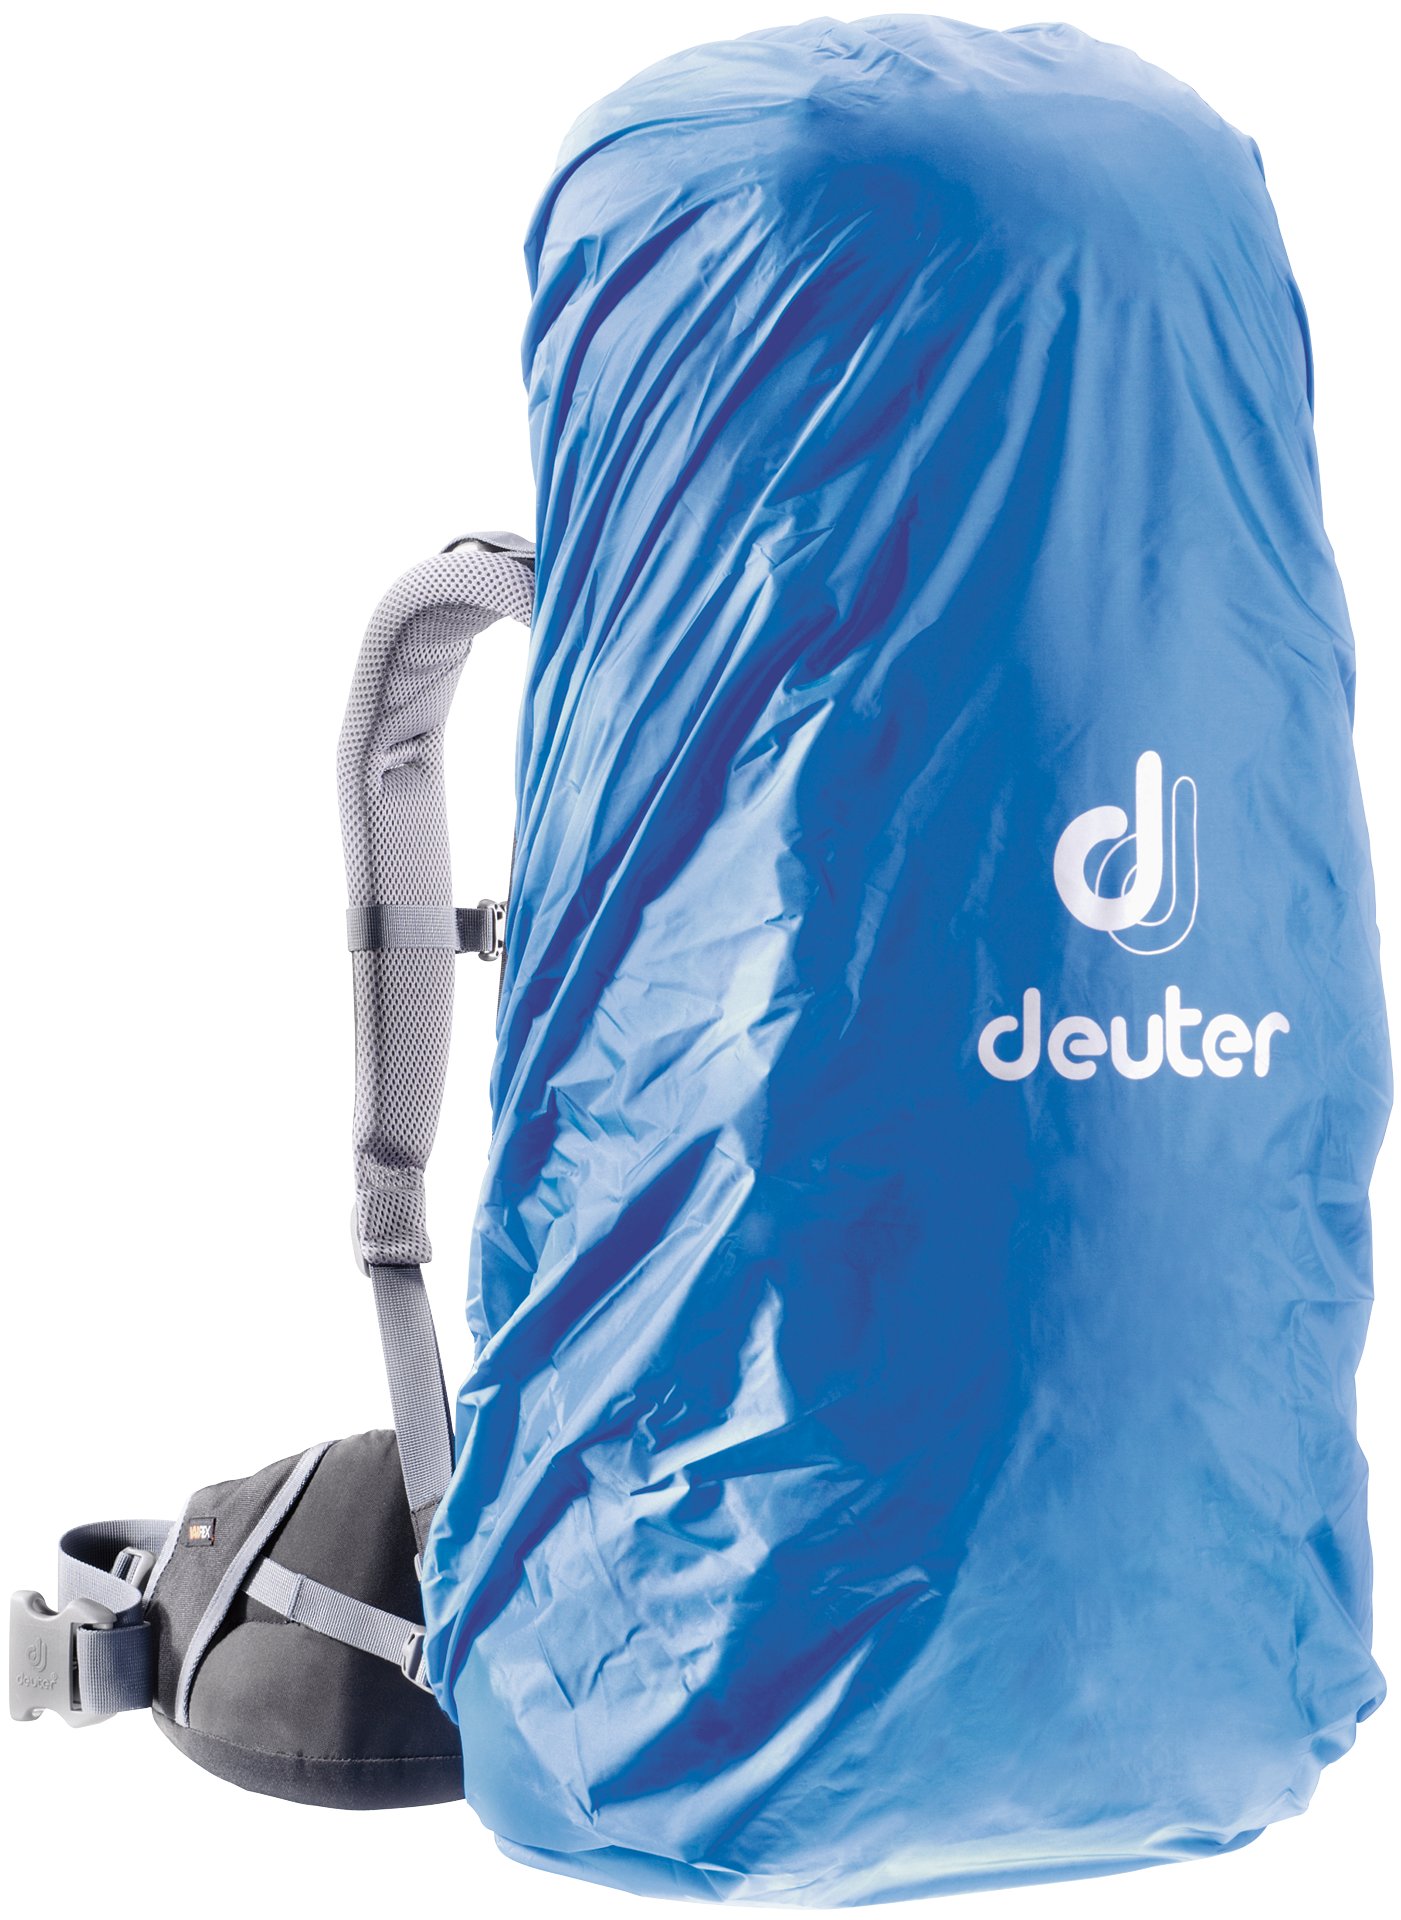 Deuter - Rain Cover III, Regenschutz für den Rucksack